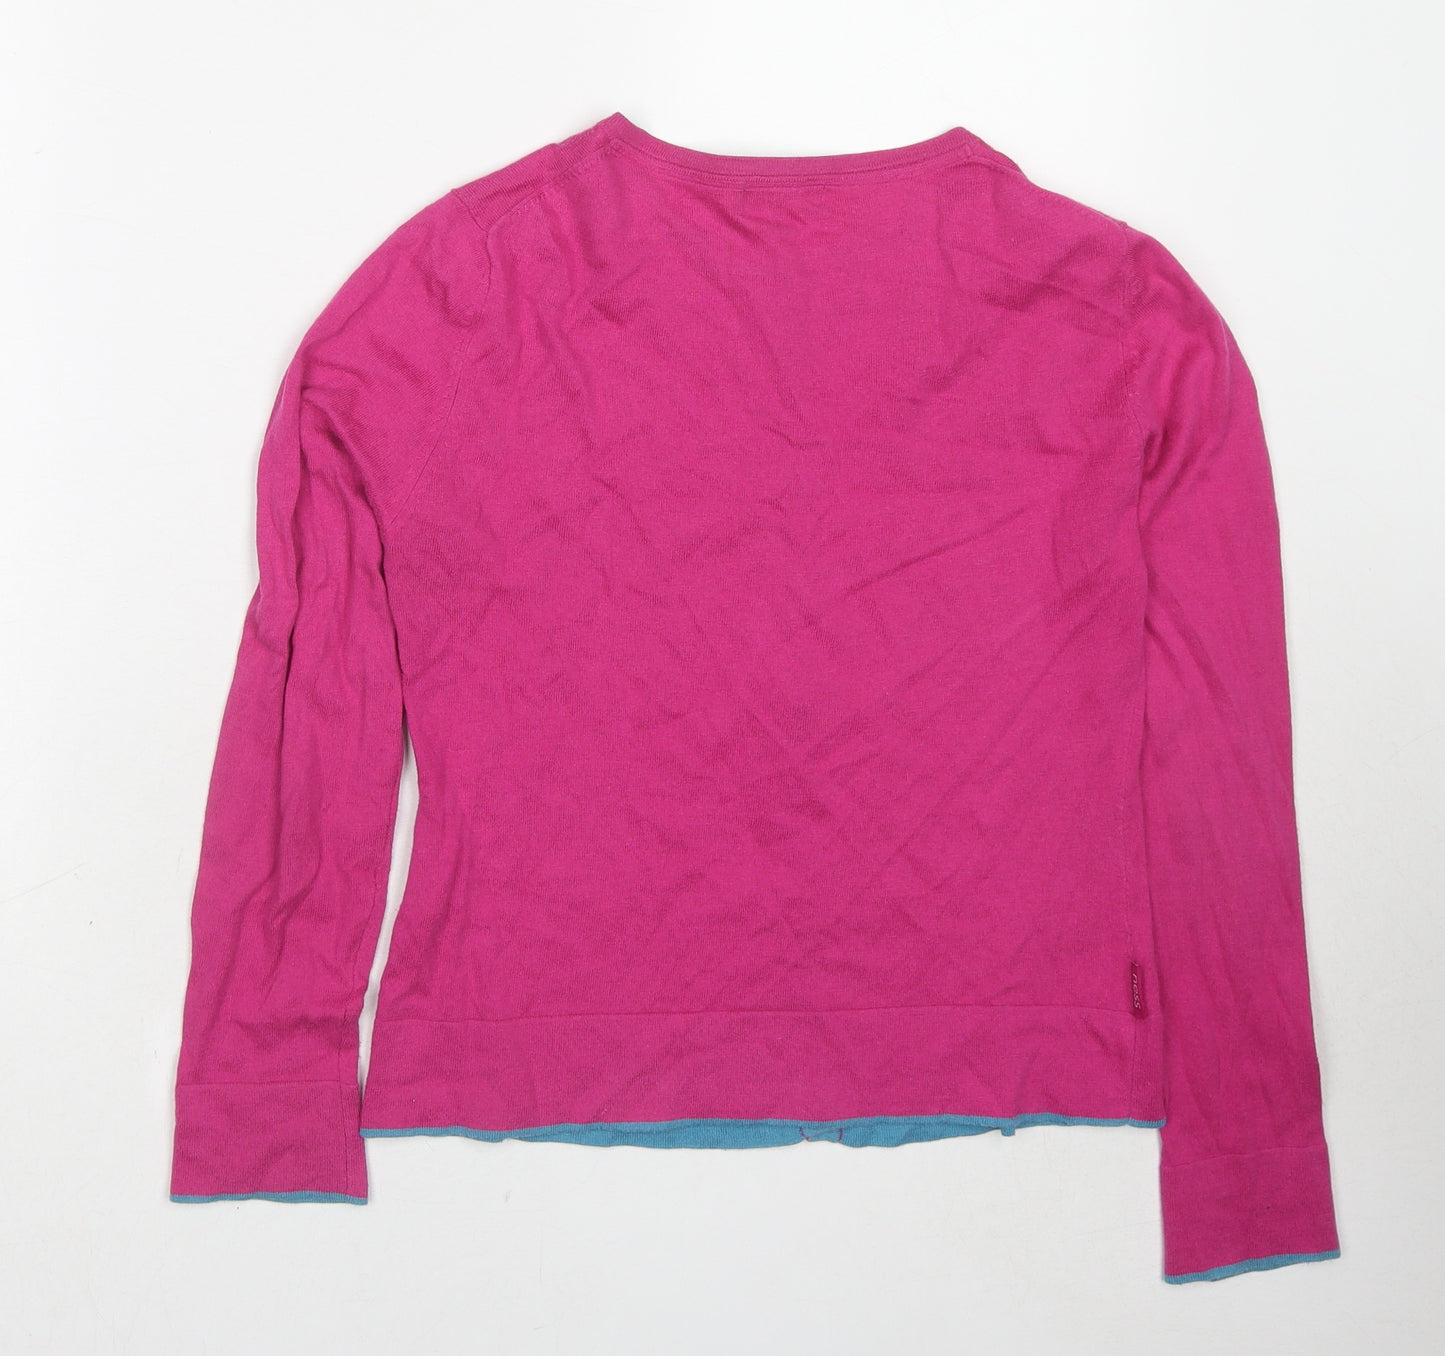 Ness Womens Pink Round Neck Cotton Cardigan Jumper Size M